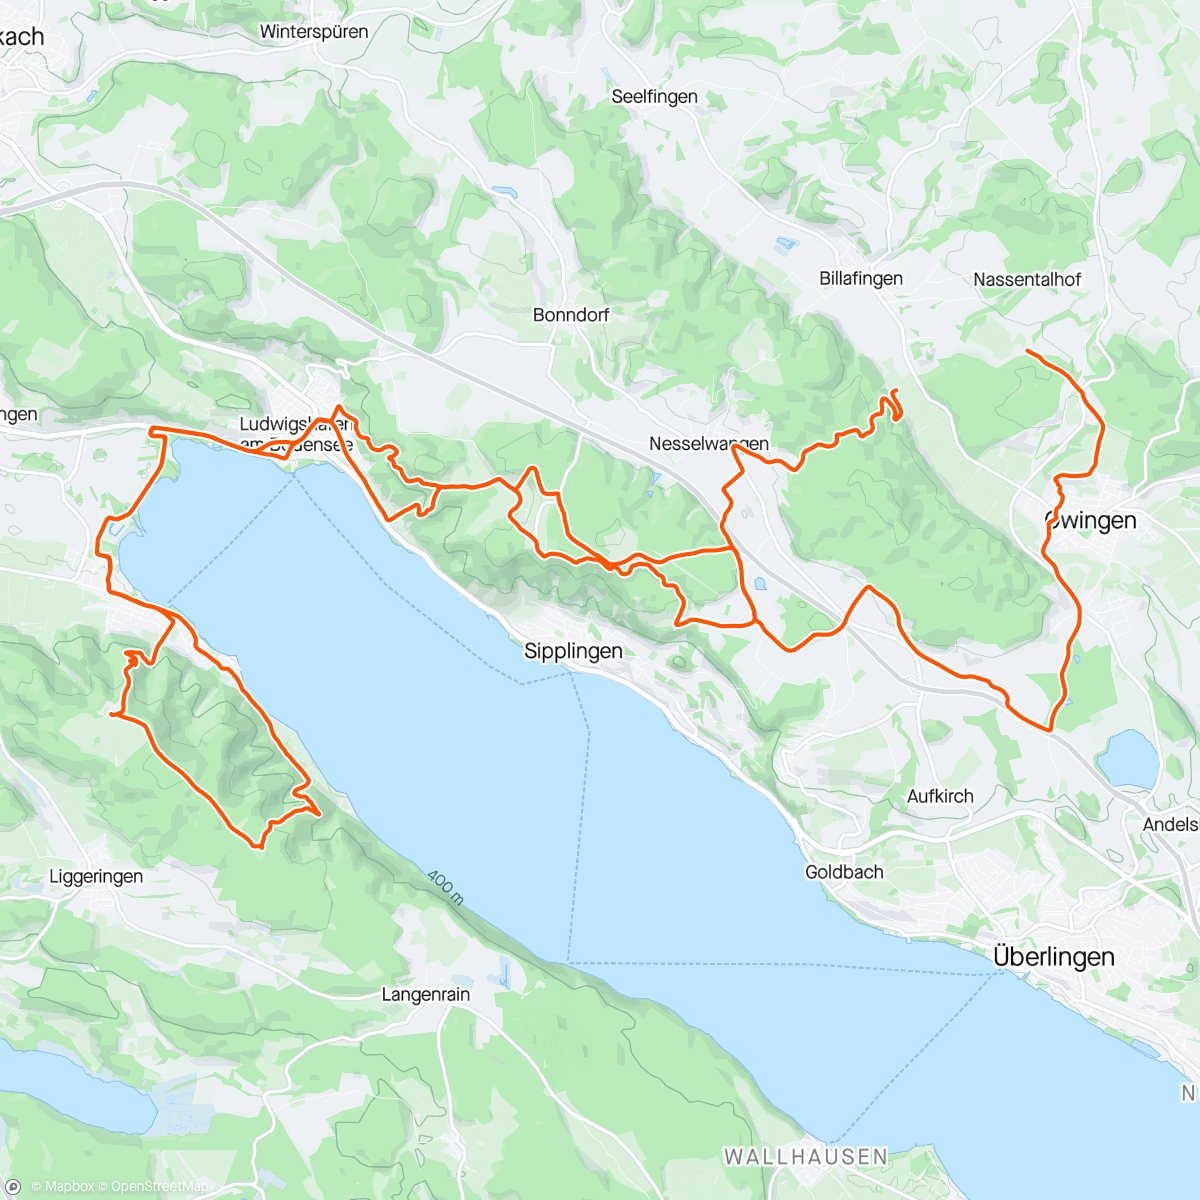 「Mountainbike-Fahrt am Morgen」活動的地圖